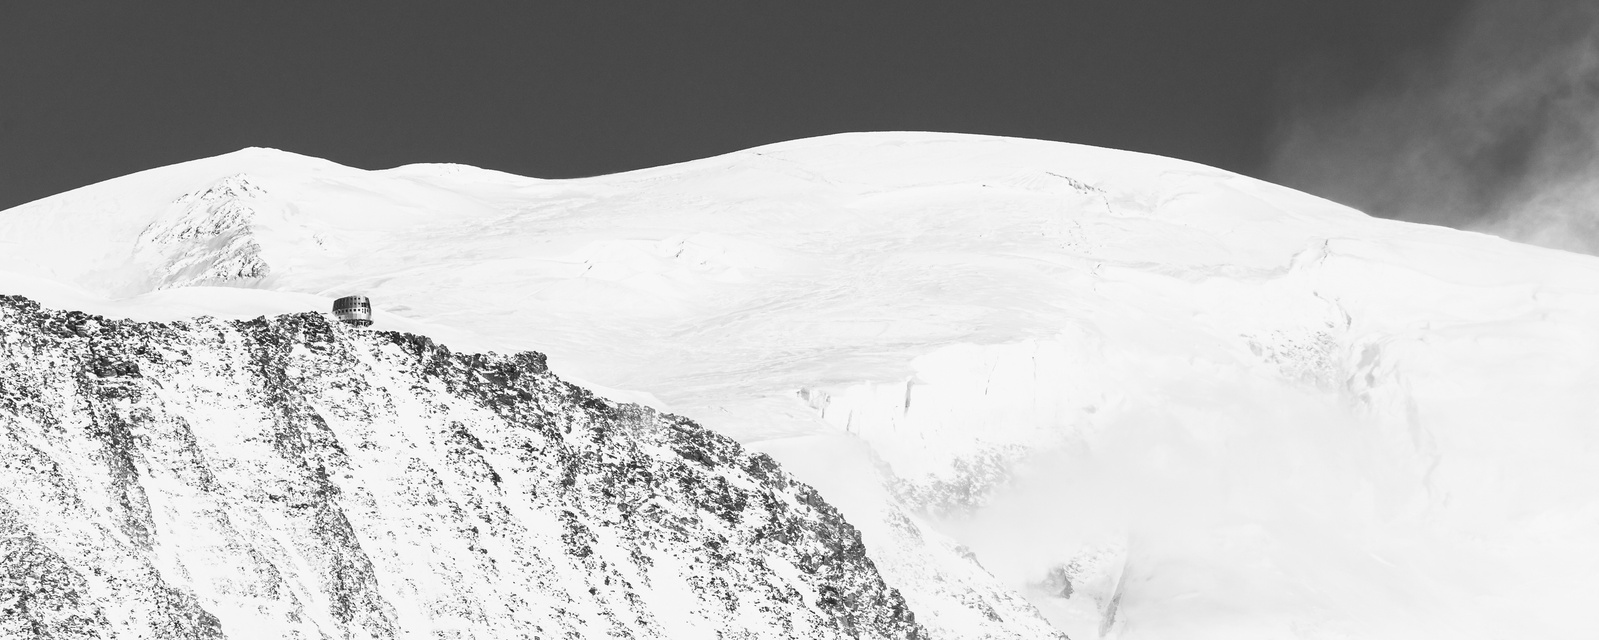 crête sommitale du Mont blanc en noir et blanc avec refuge du Goûter en amorce